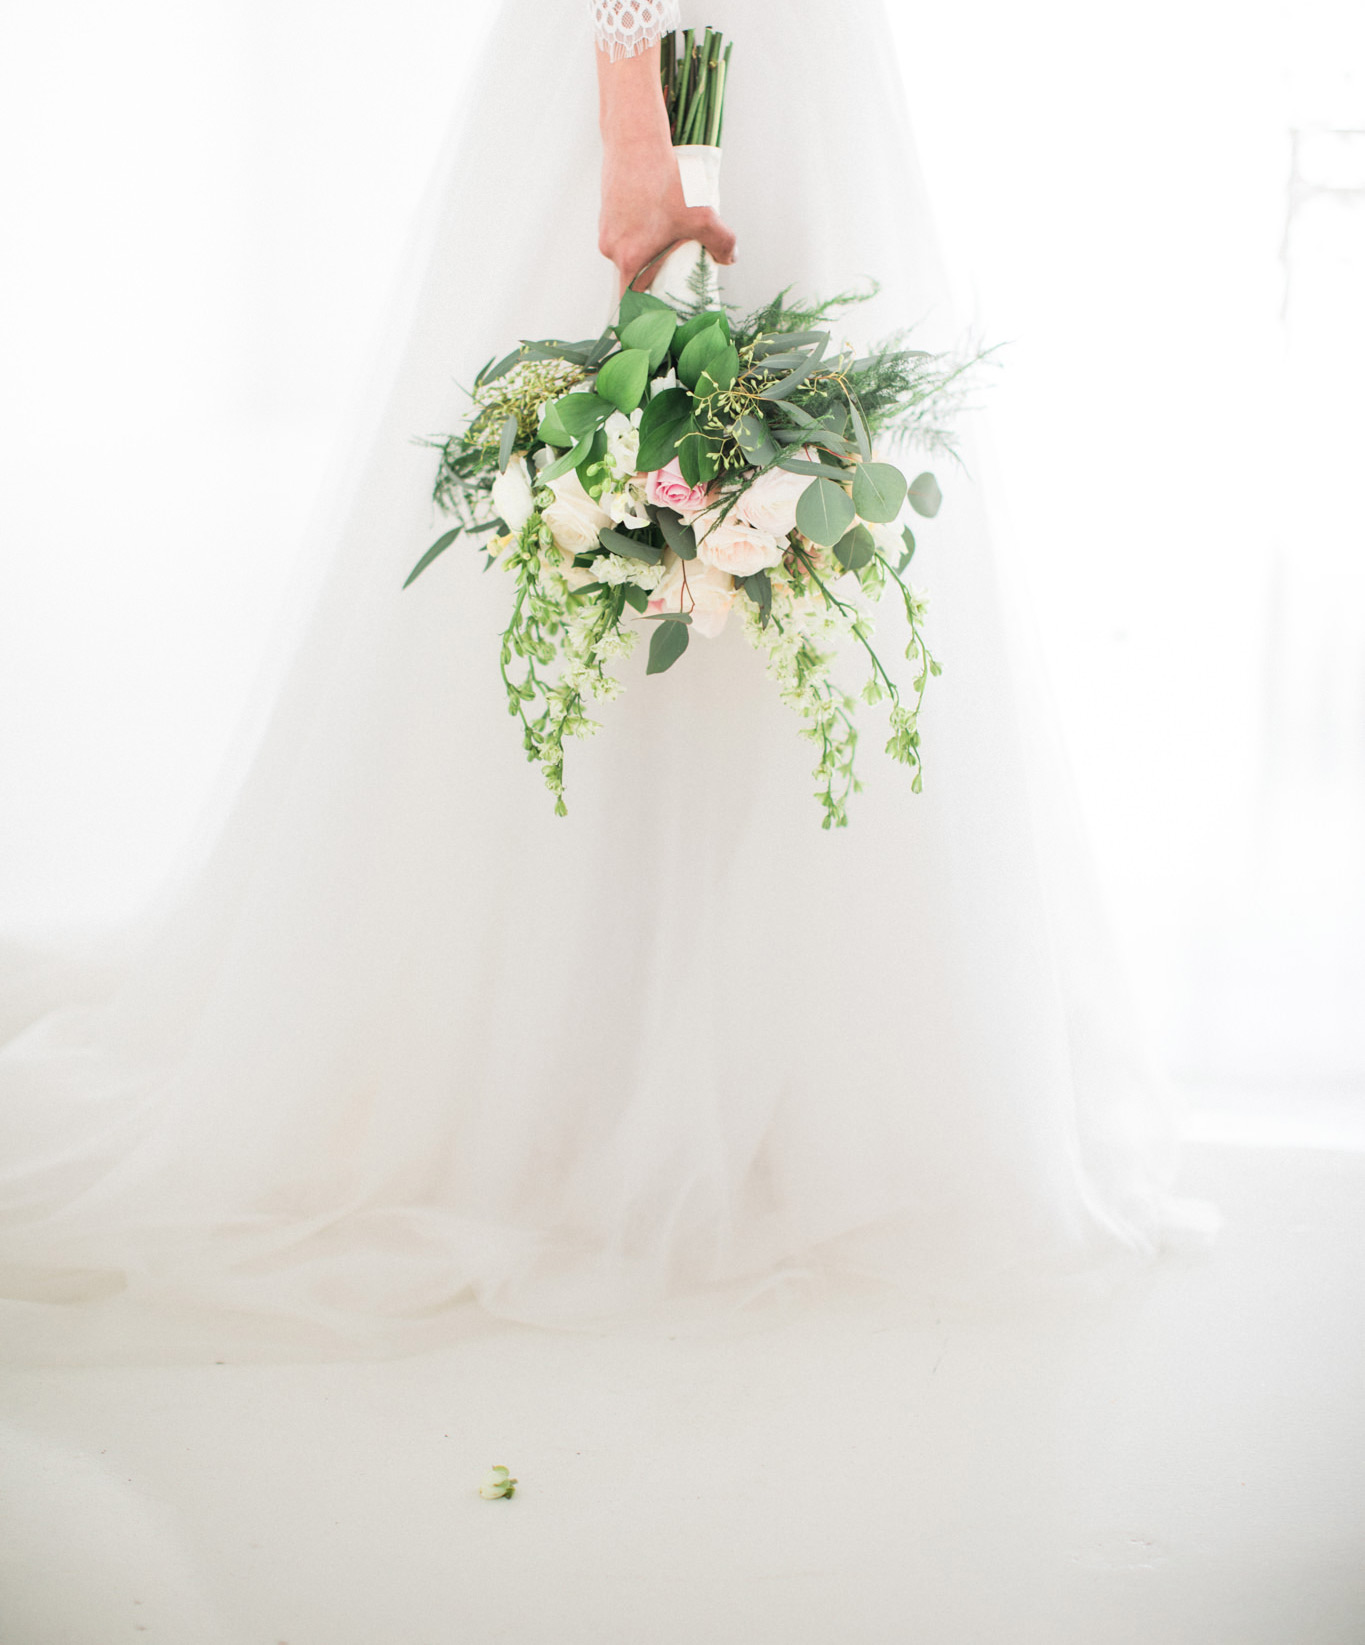 Bride with bouquet